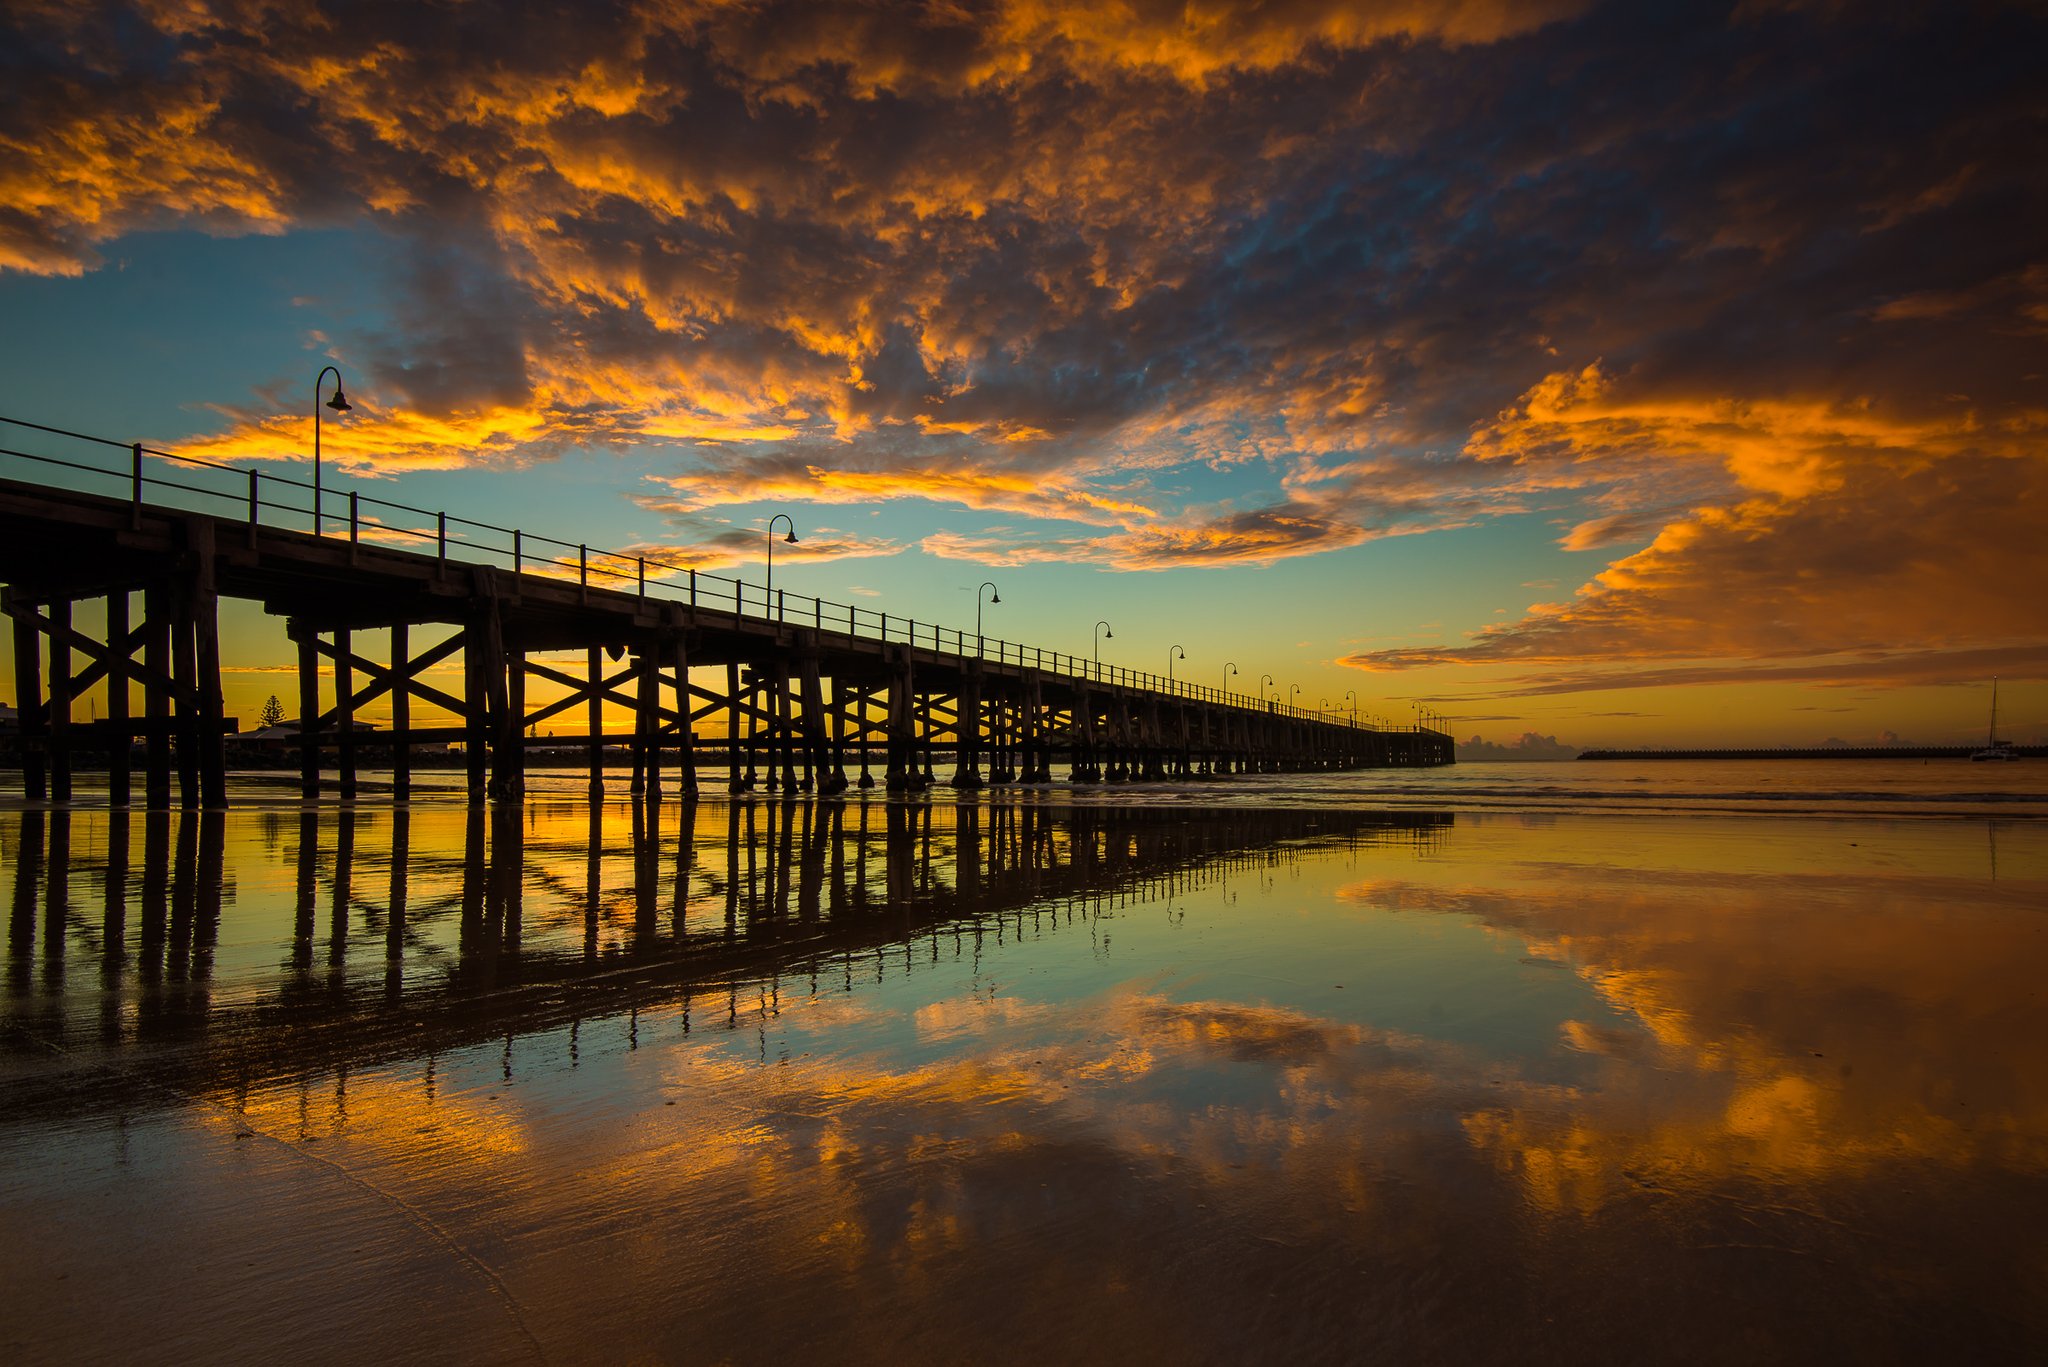 Jetty reflections . Coffs Harbour, Australia by Glen Anderson @Gleno_